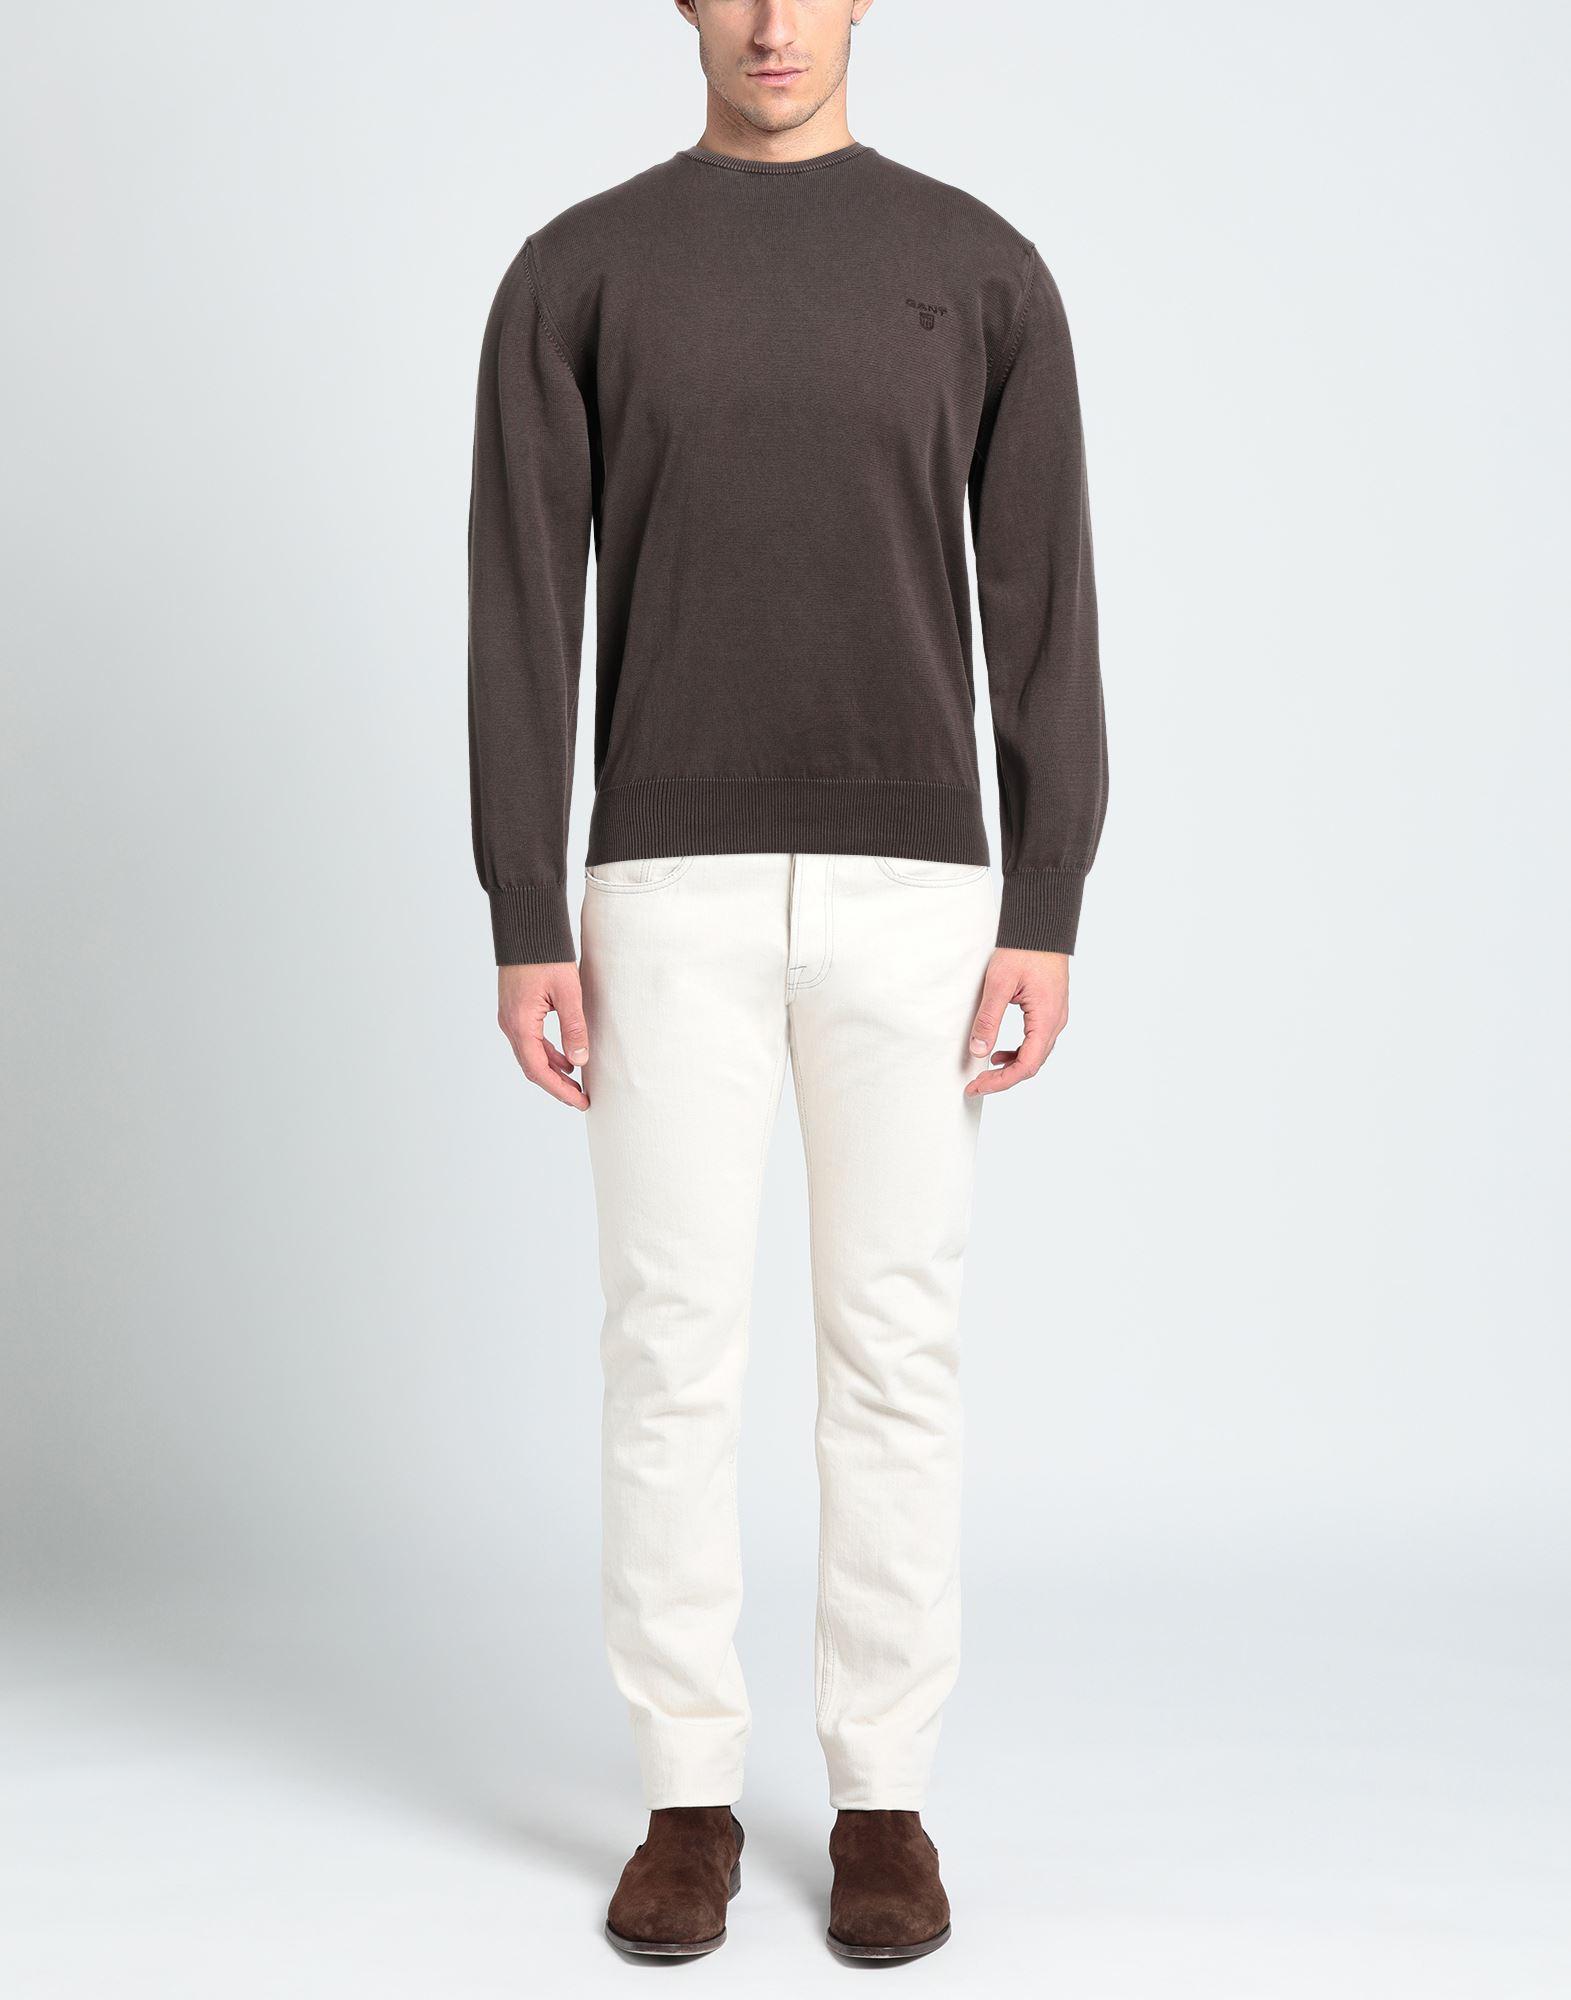 GANT Sweater in Brown for Men | Lyst